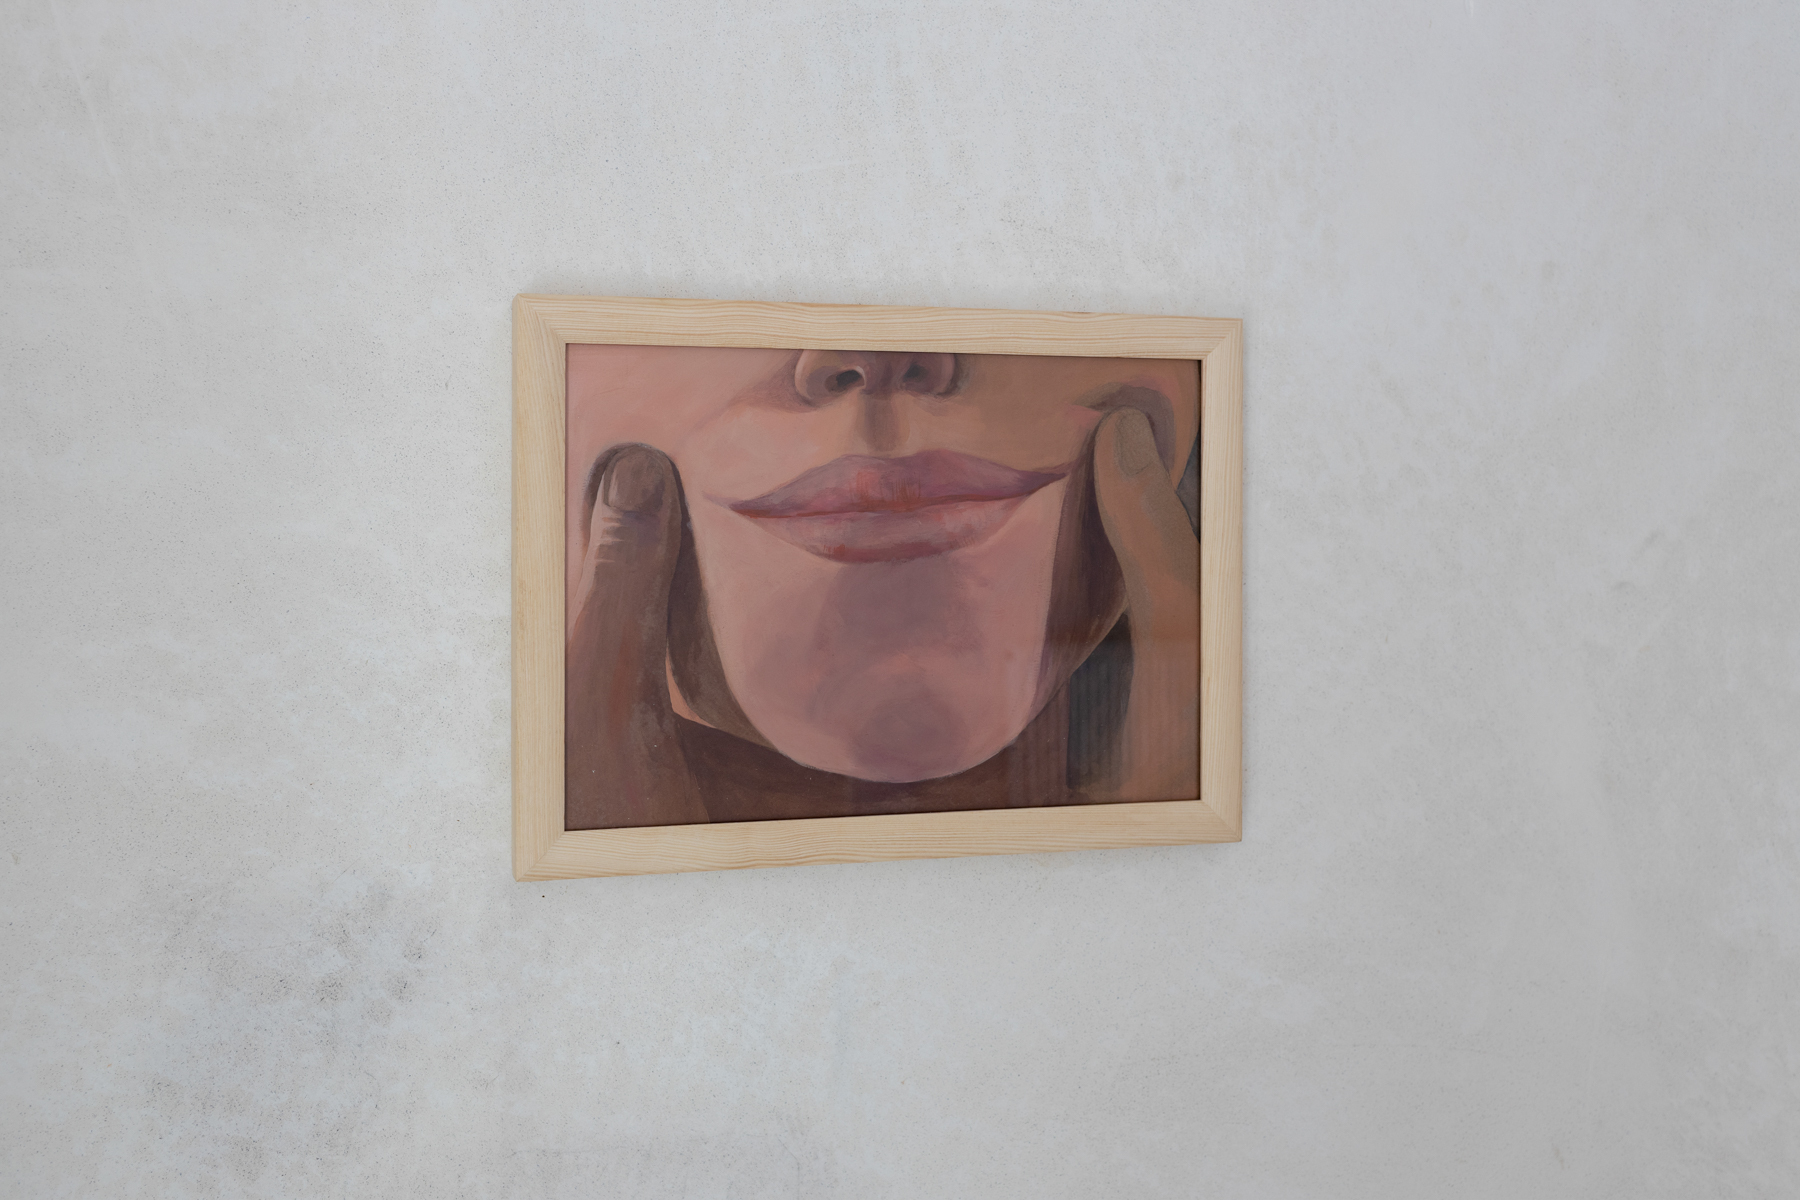 Alicja Pakosz, Smile, 2021, acrylic on paper, 21x29cm